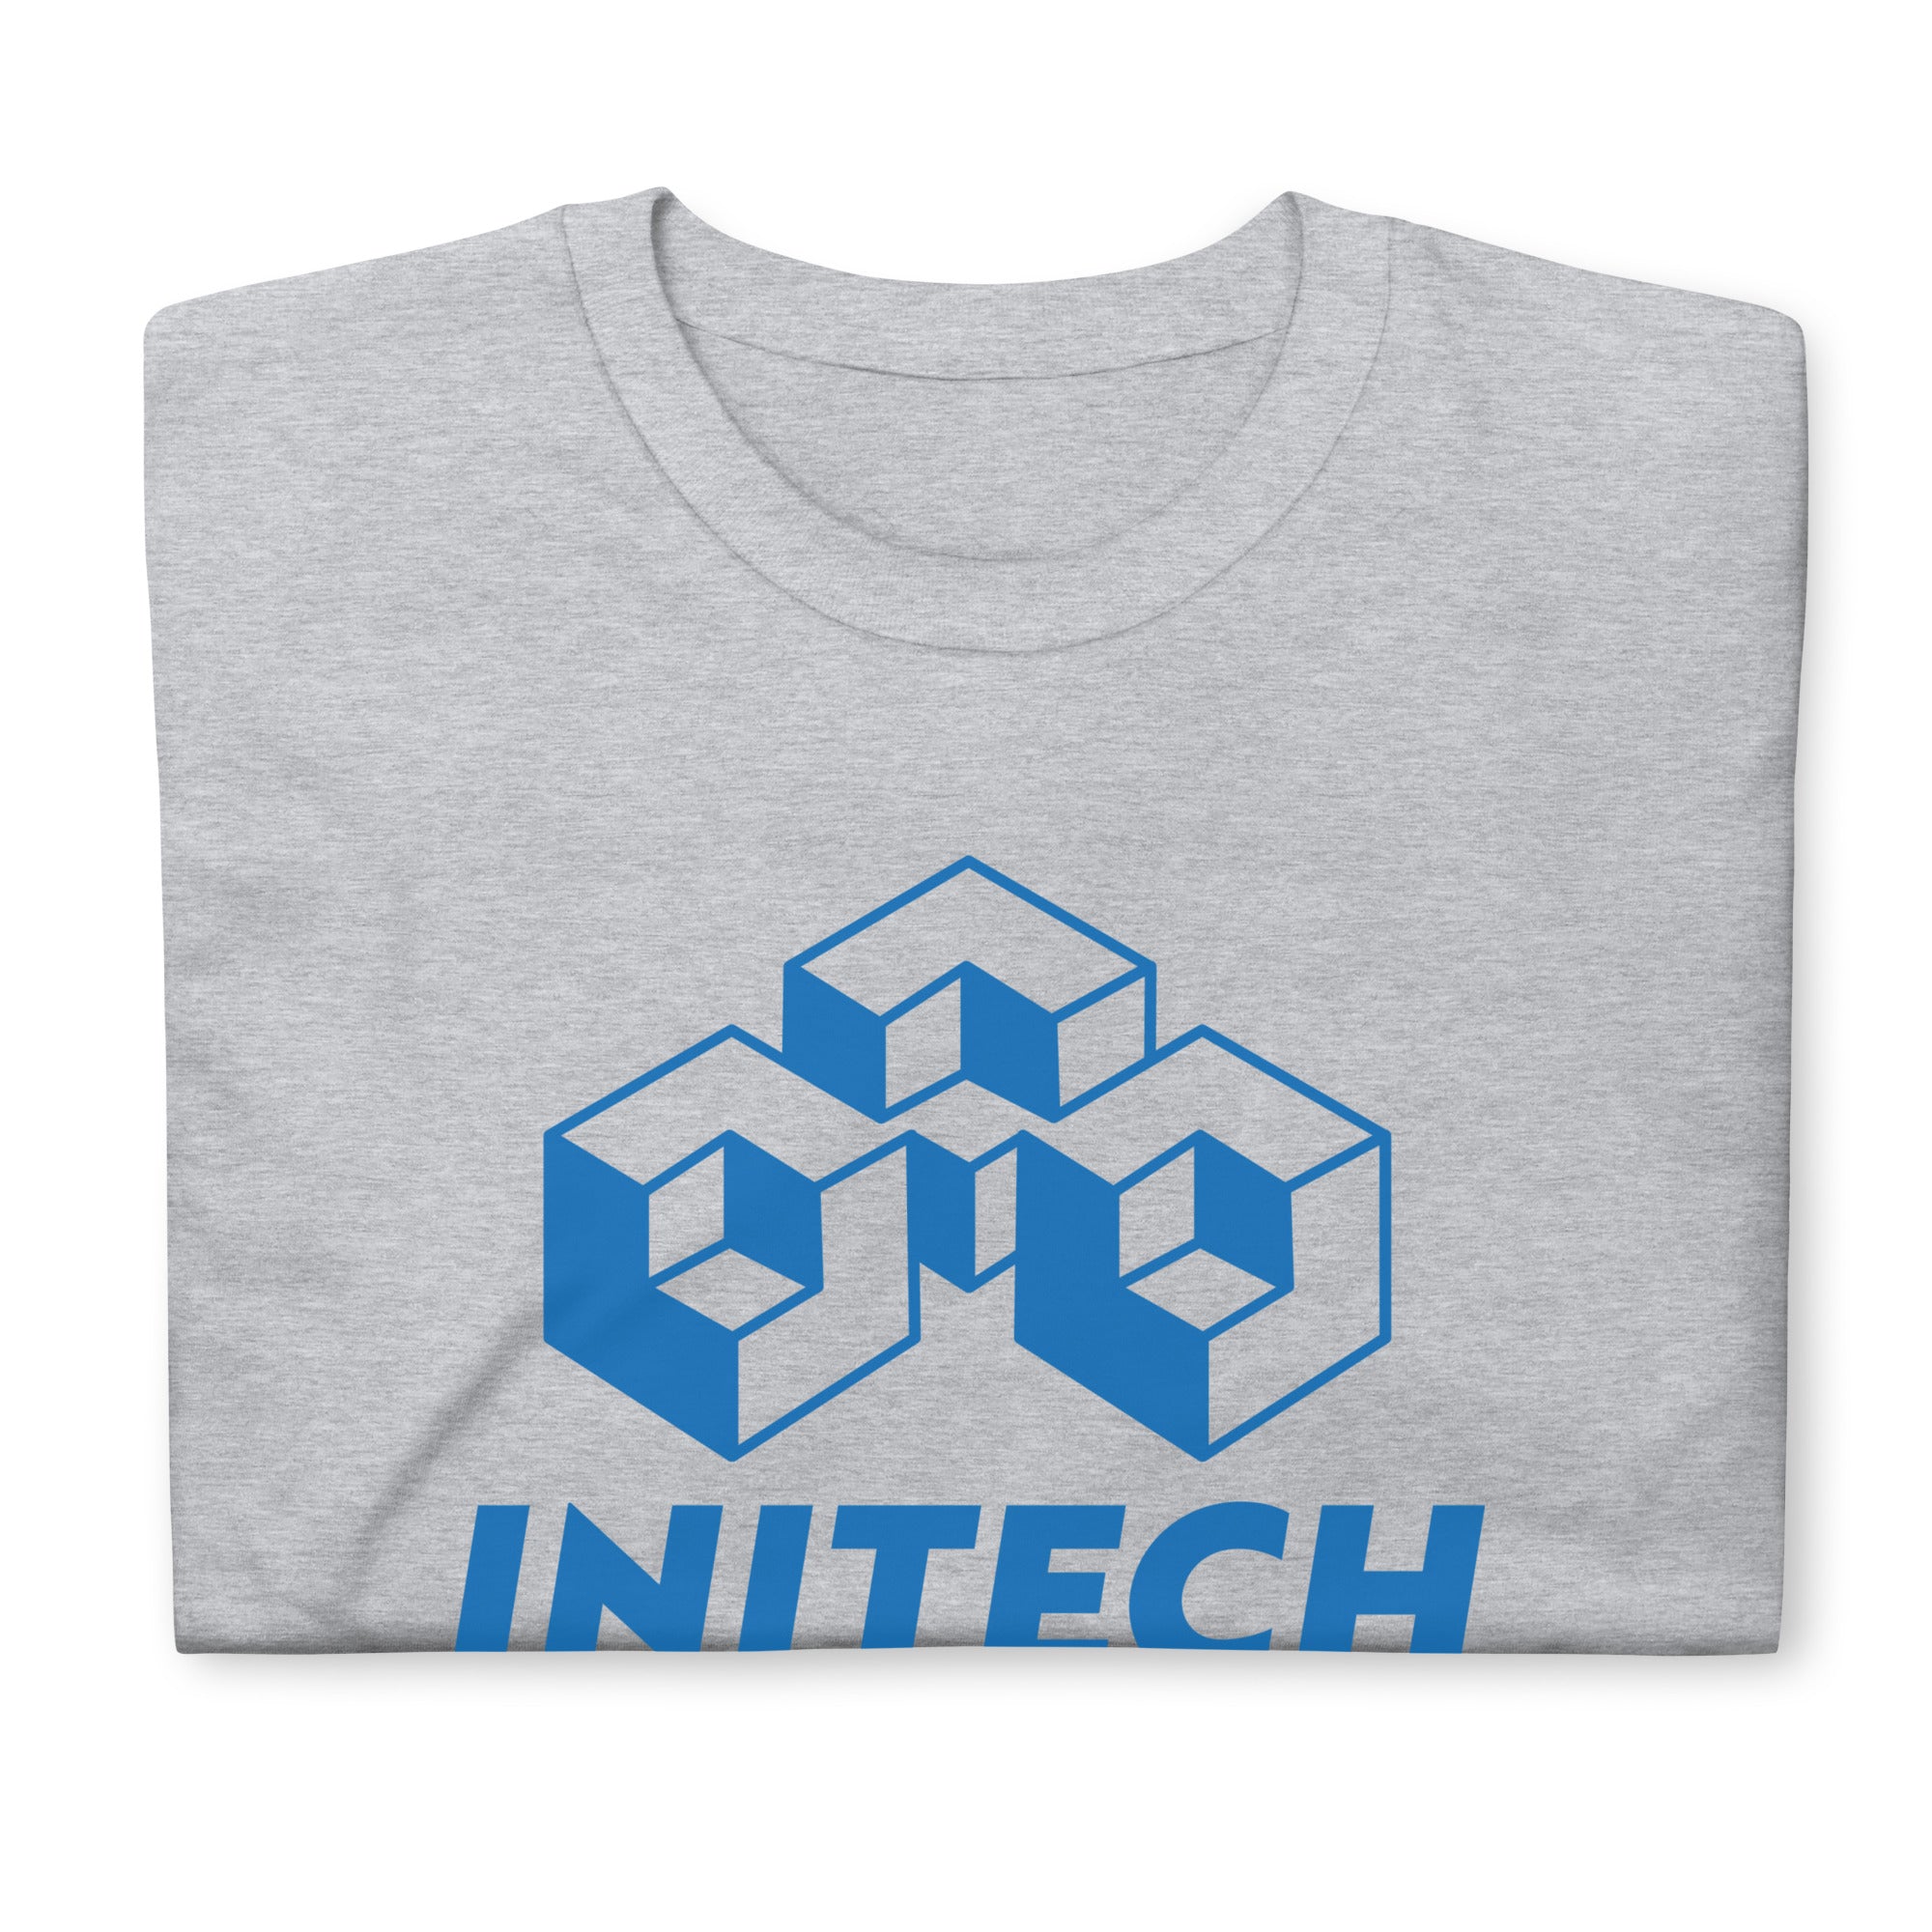 Initech Short-Sleeve T-Shirt